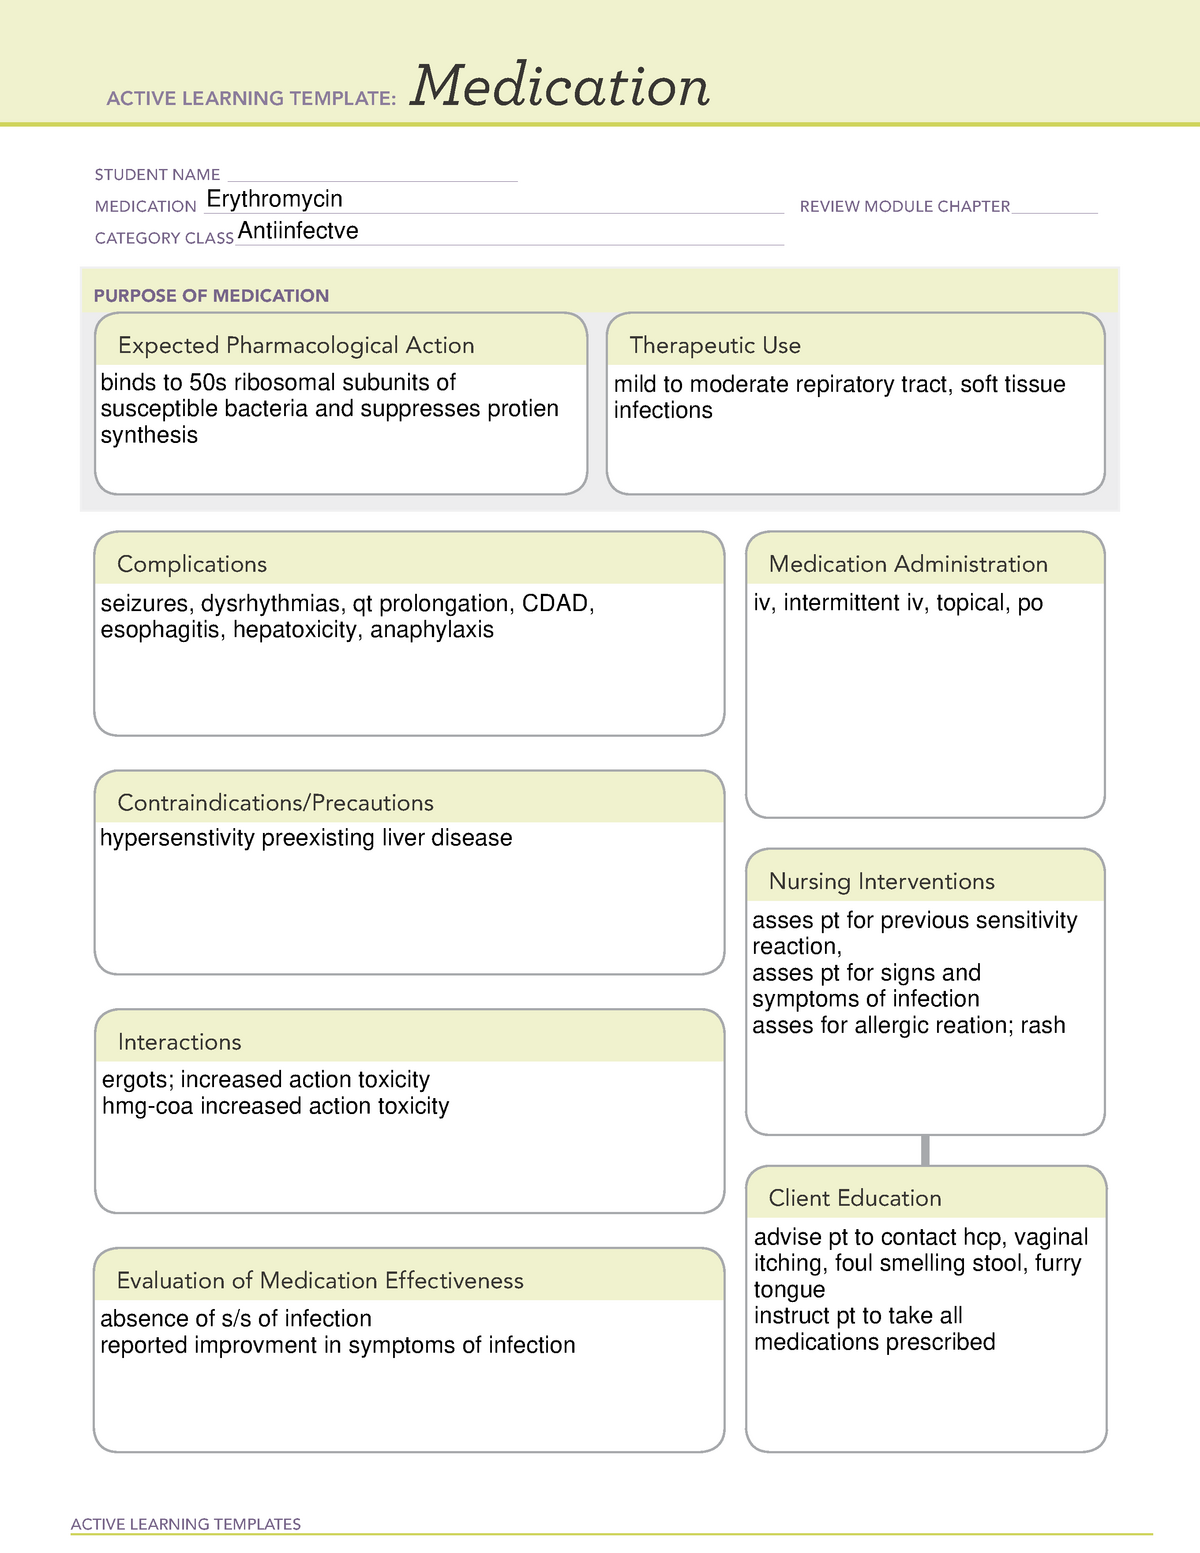 erythromycin-med-cards-active-learning-templates-medication-student-name-studocu